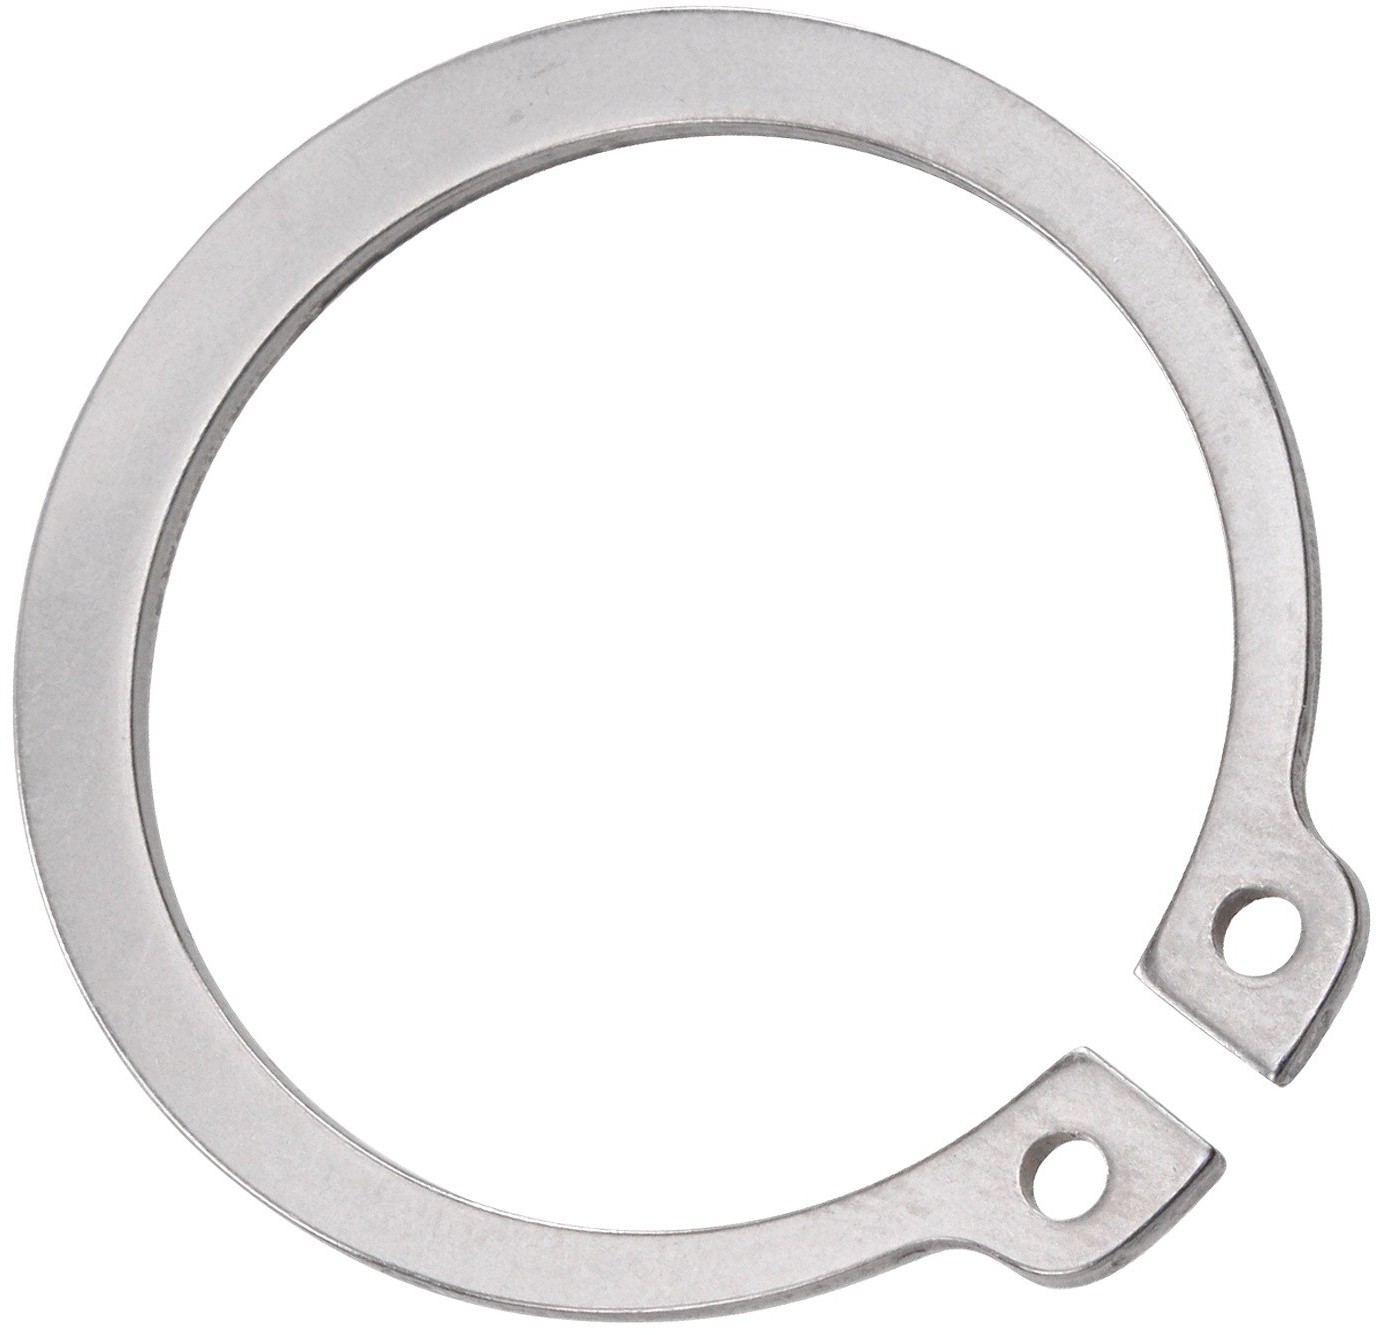 Кольцо стопорное наружное 220х5 DIN 471, нержавеющая сталь 1.4122 (А2) - фото